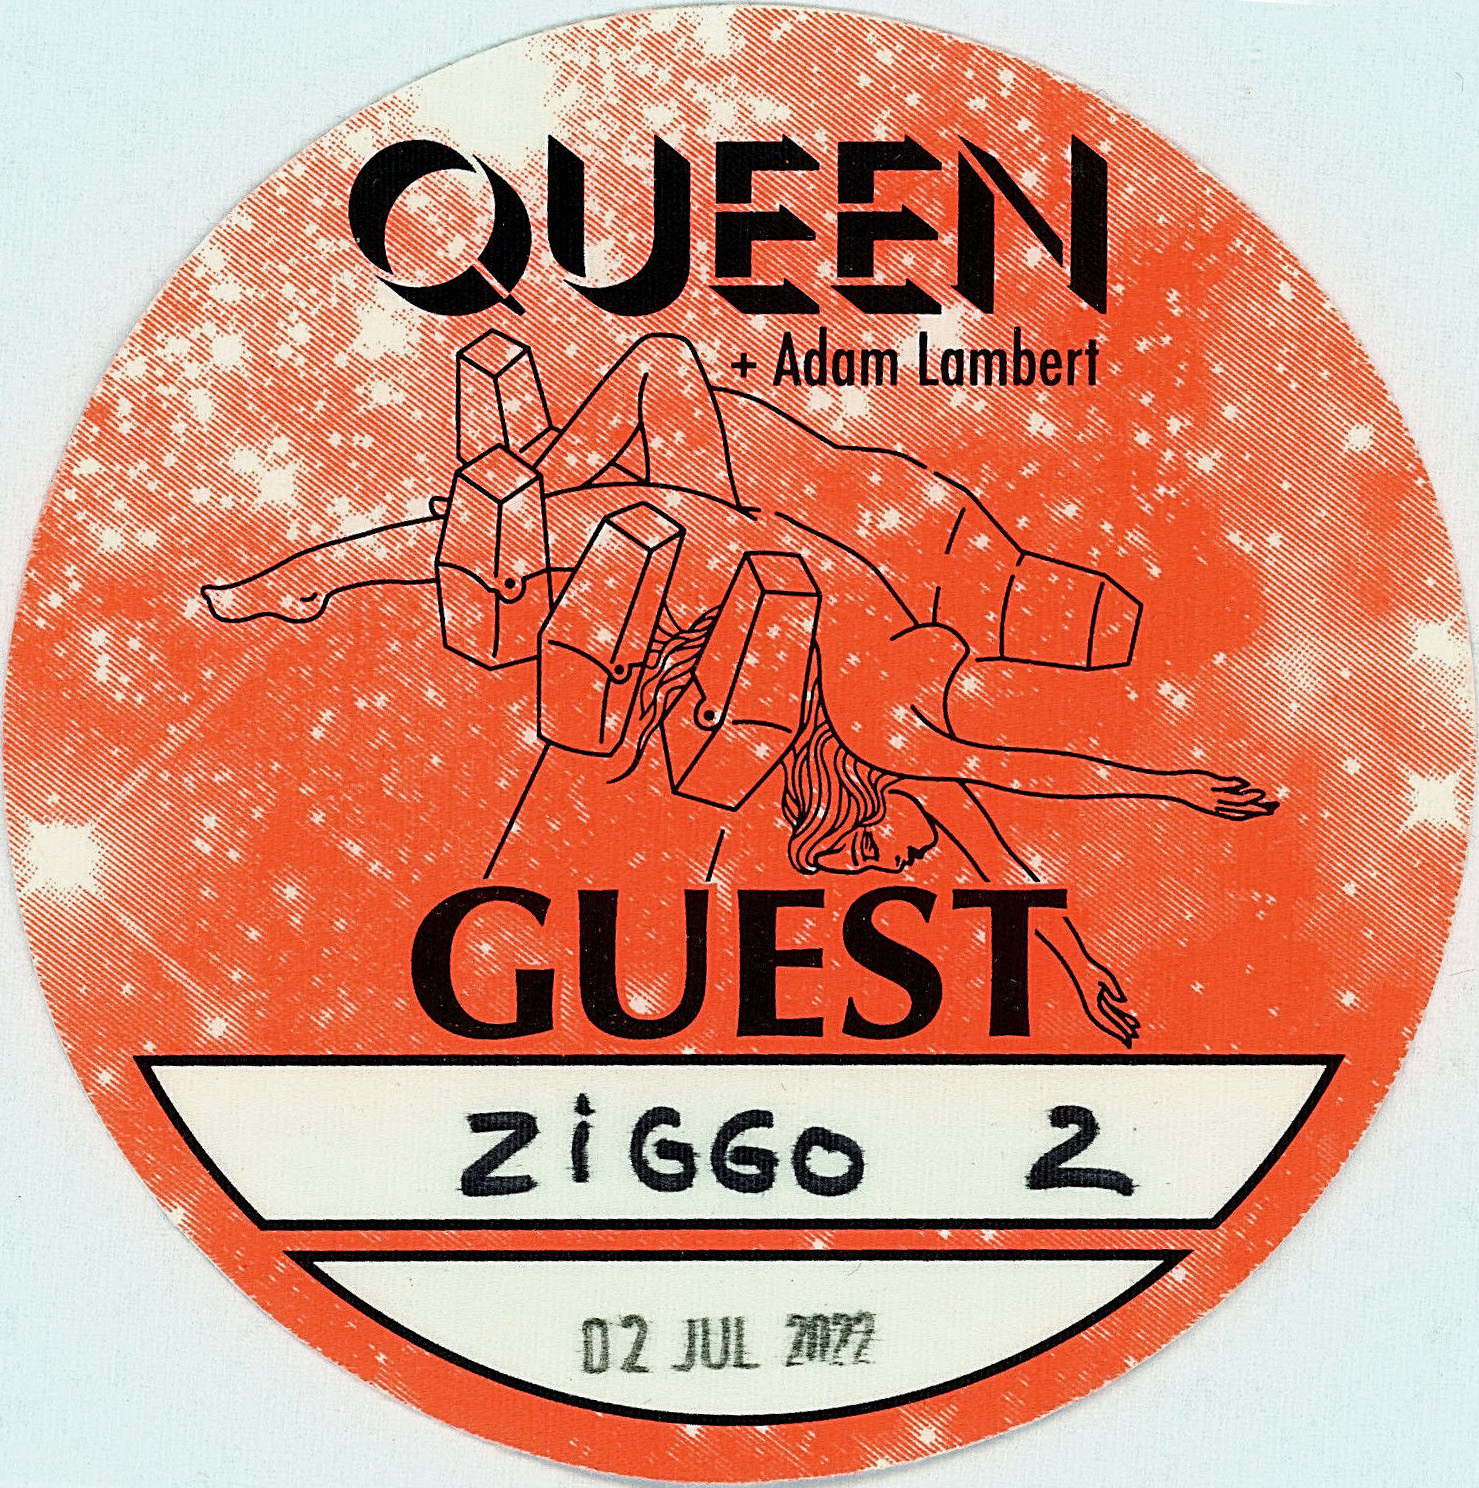 Guest pass for the Queen + Adam Lambert concert in Amsterdam on 02.07.2022